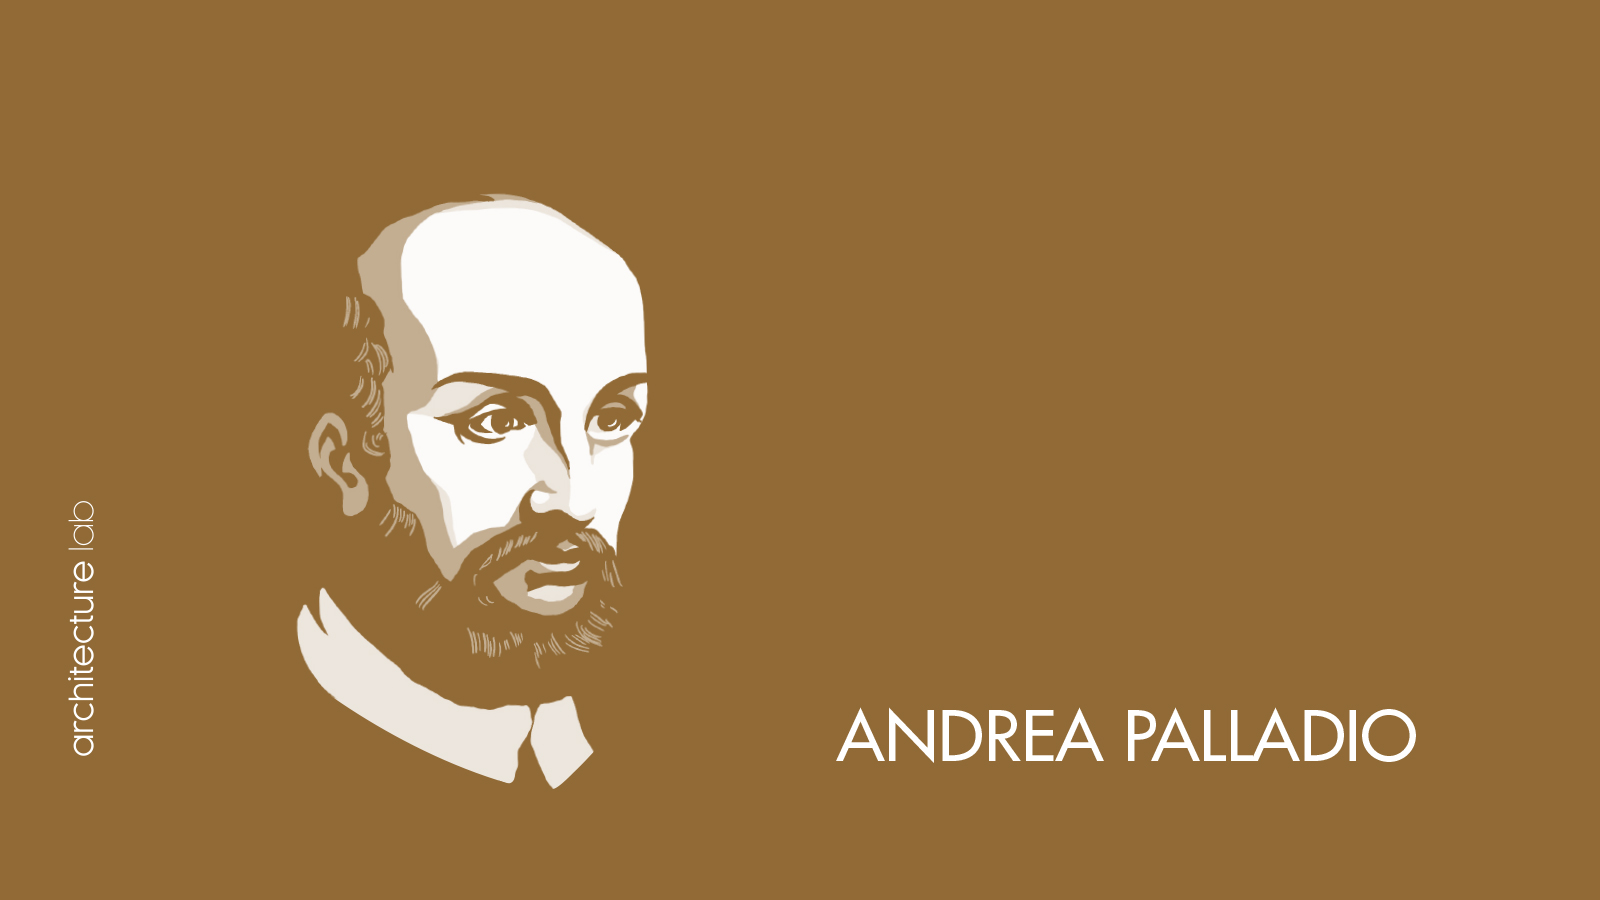 3. Andrea palladio